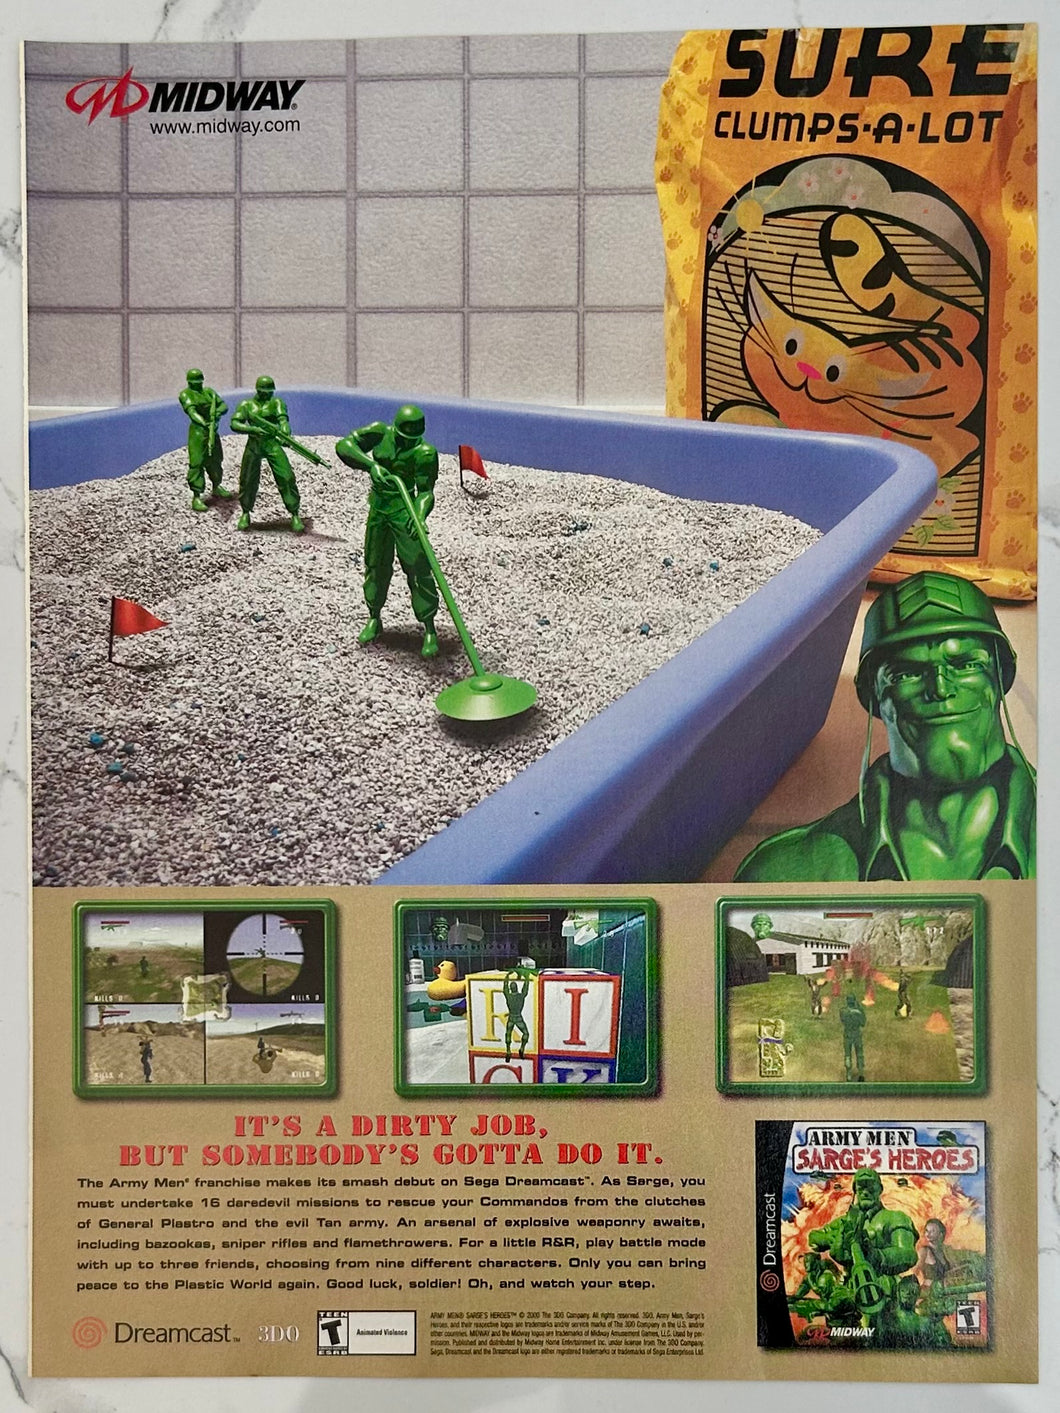 Army Men: Sarge’s Heroes - Dreamcast - Original Vintage Advertisement - Print Ads - Laminated A4 Poster